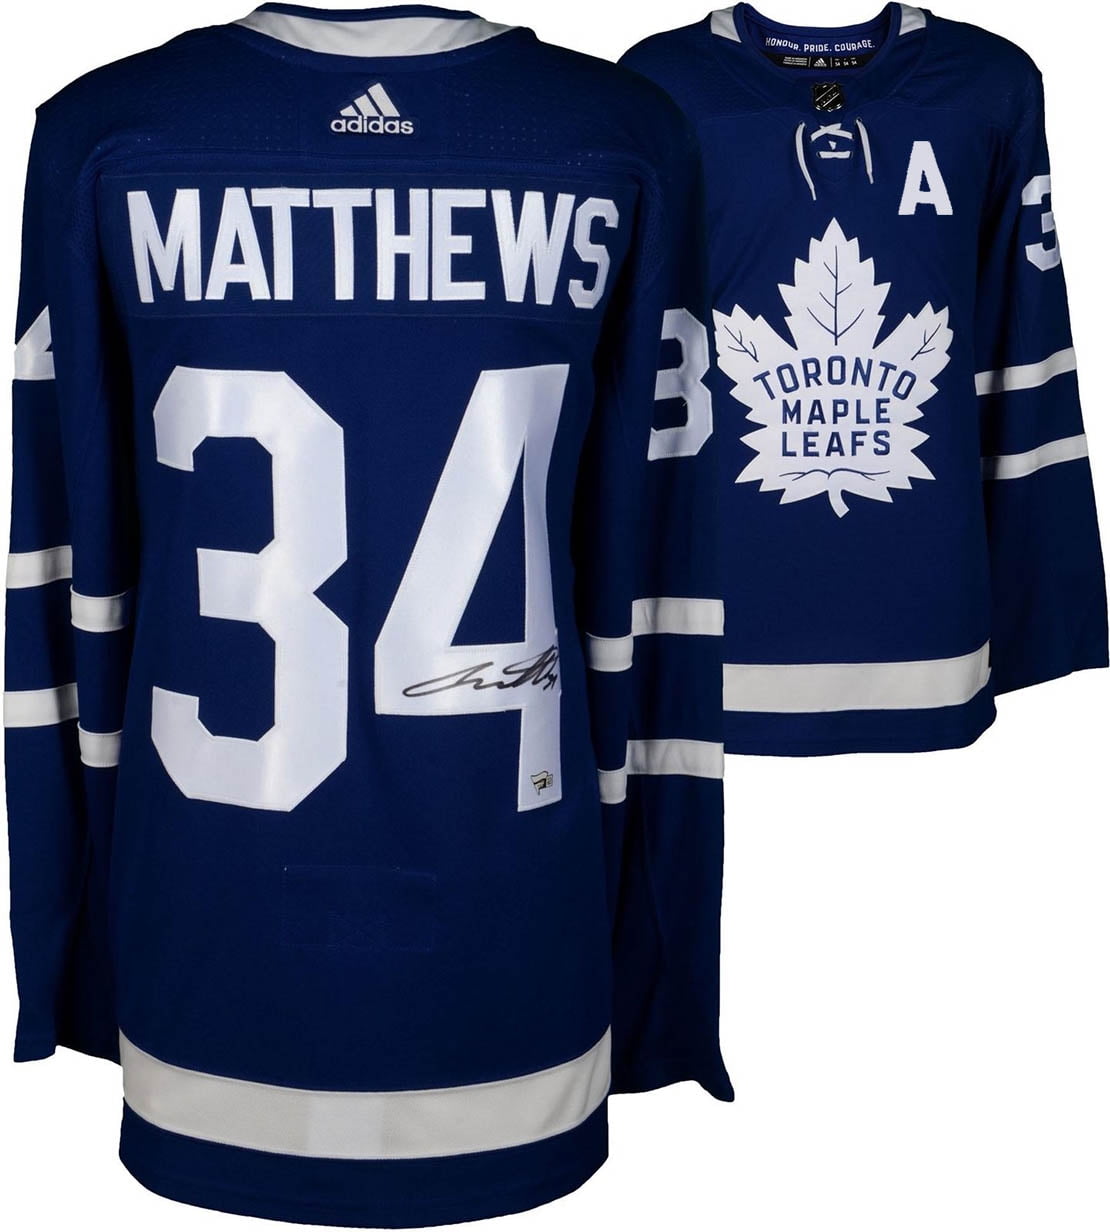 authentic toronto maple leafs hockey jerseys